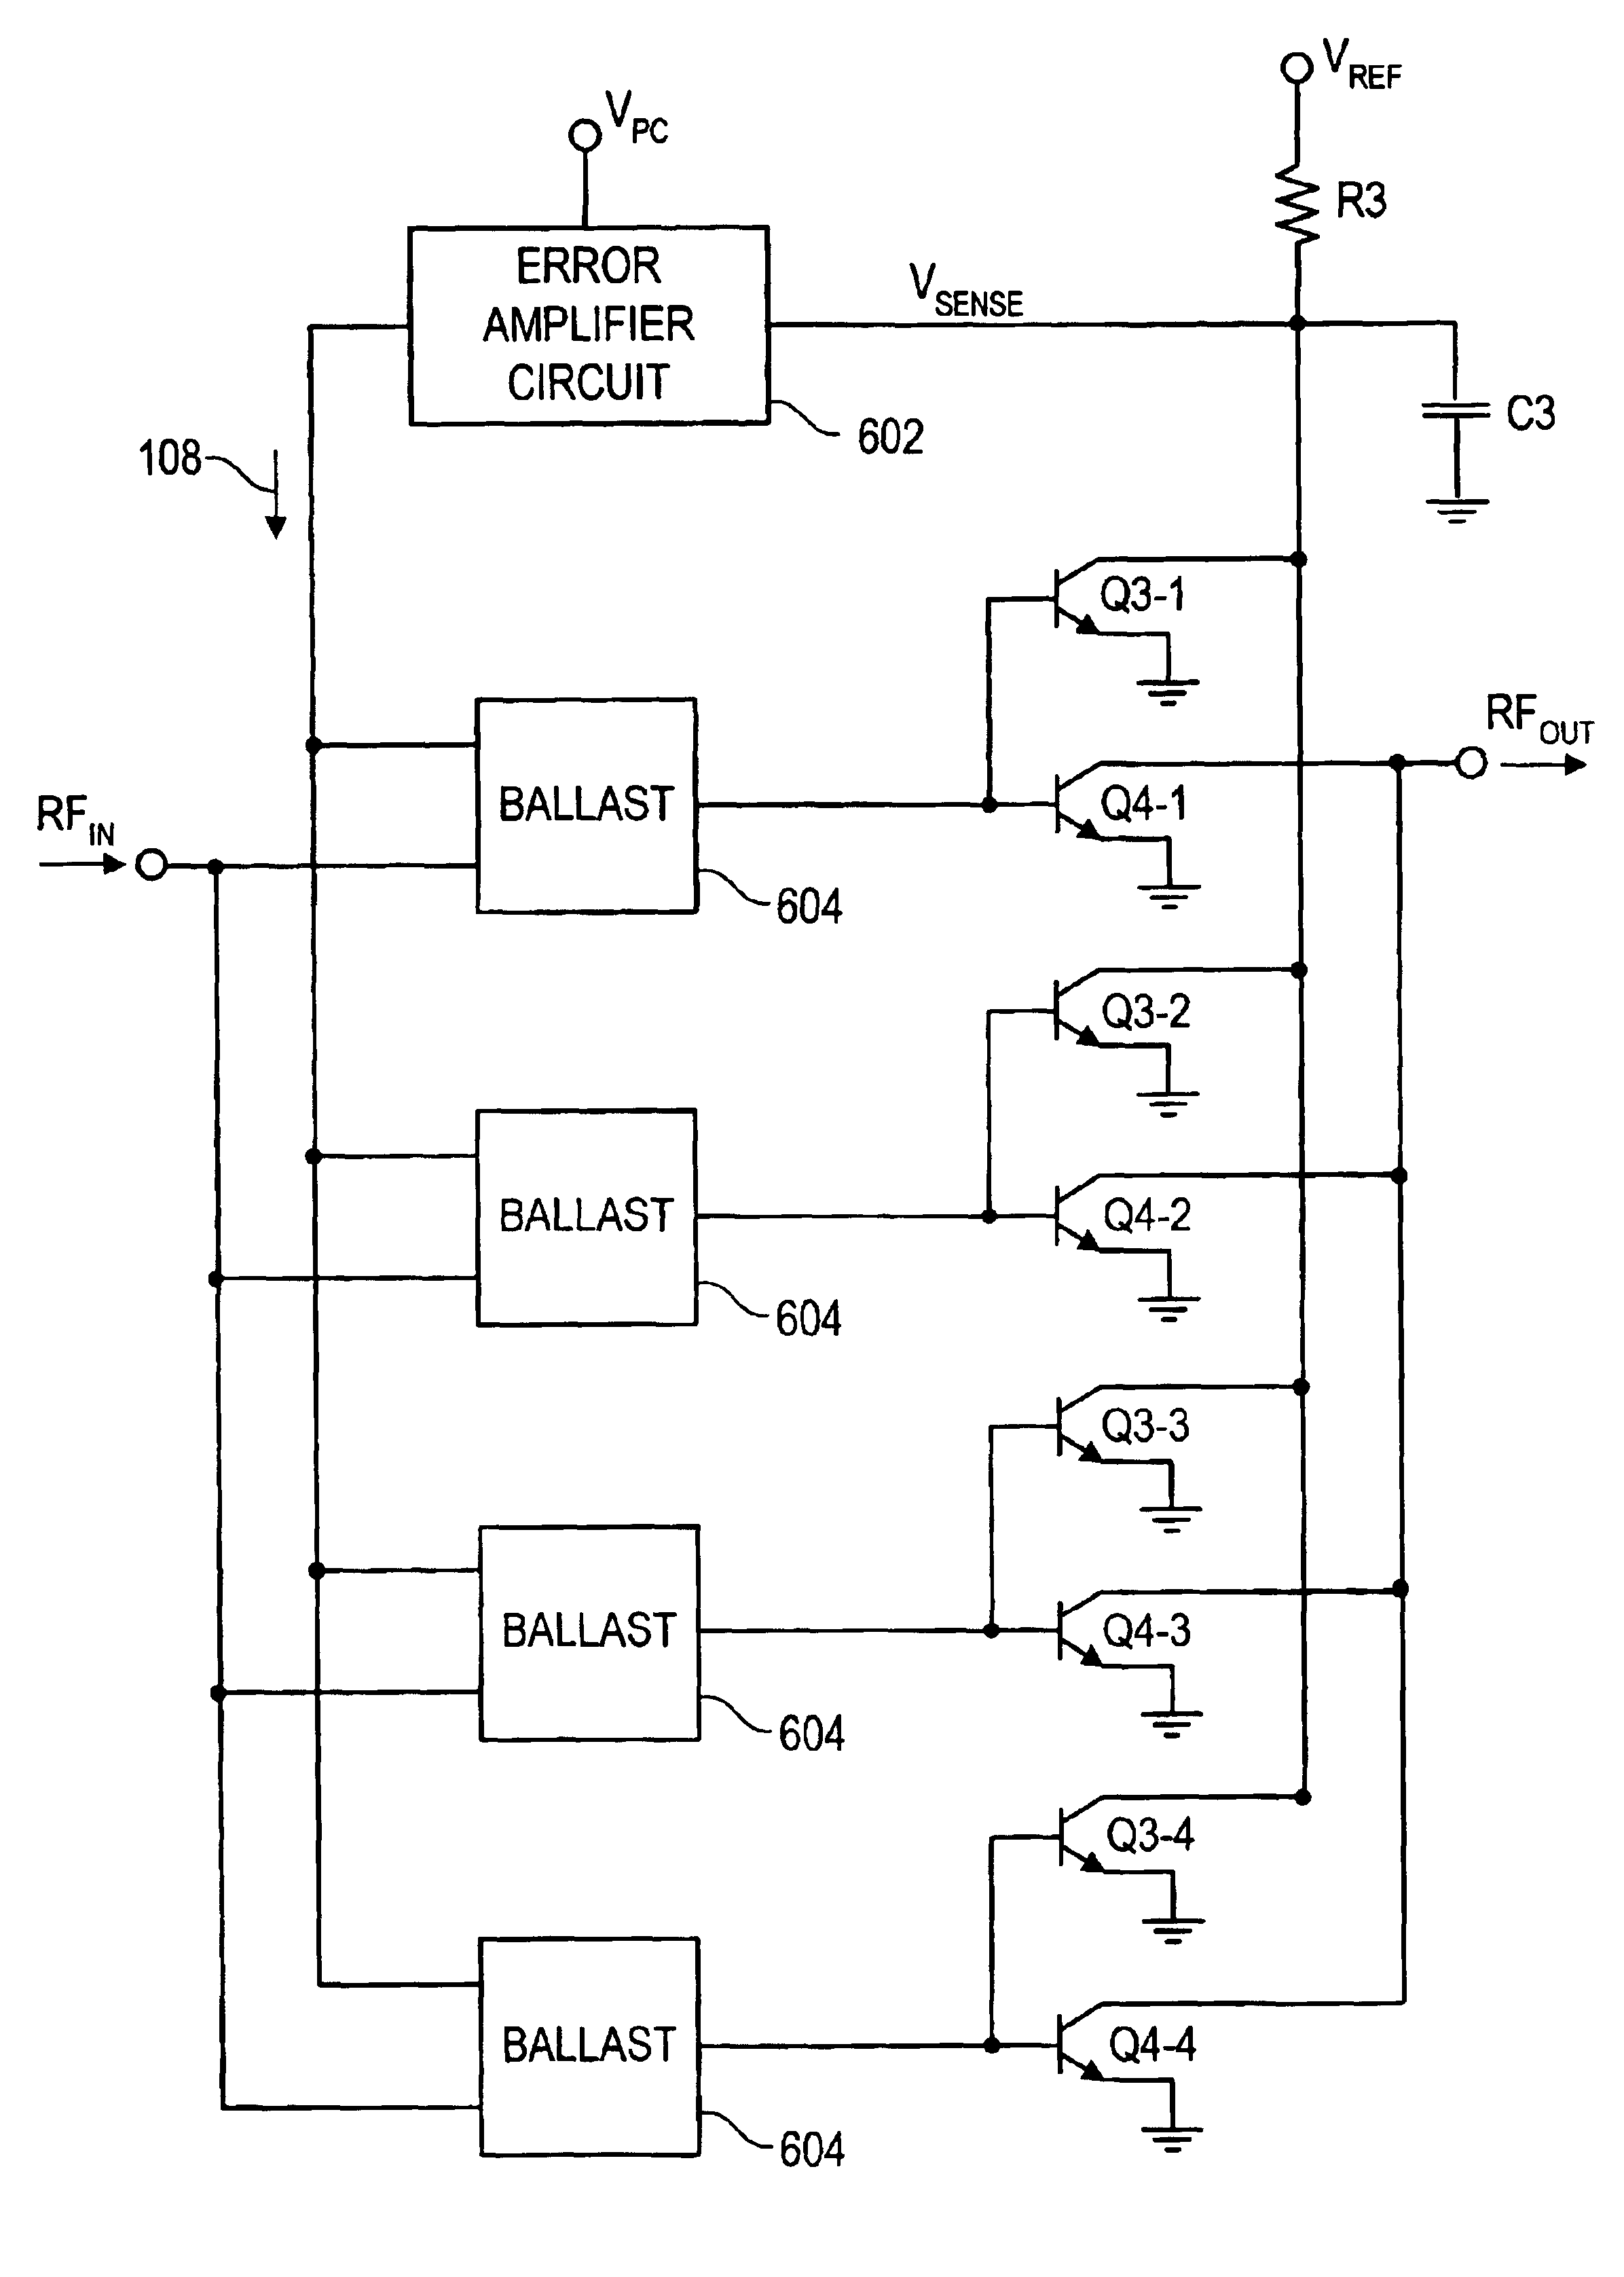 Amplifier power control circuit